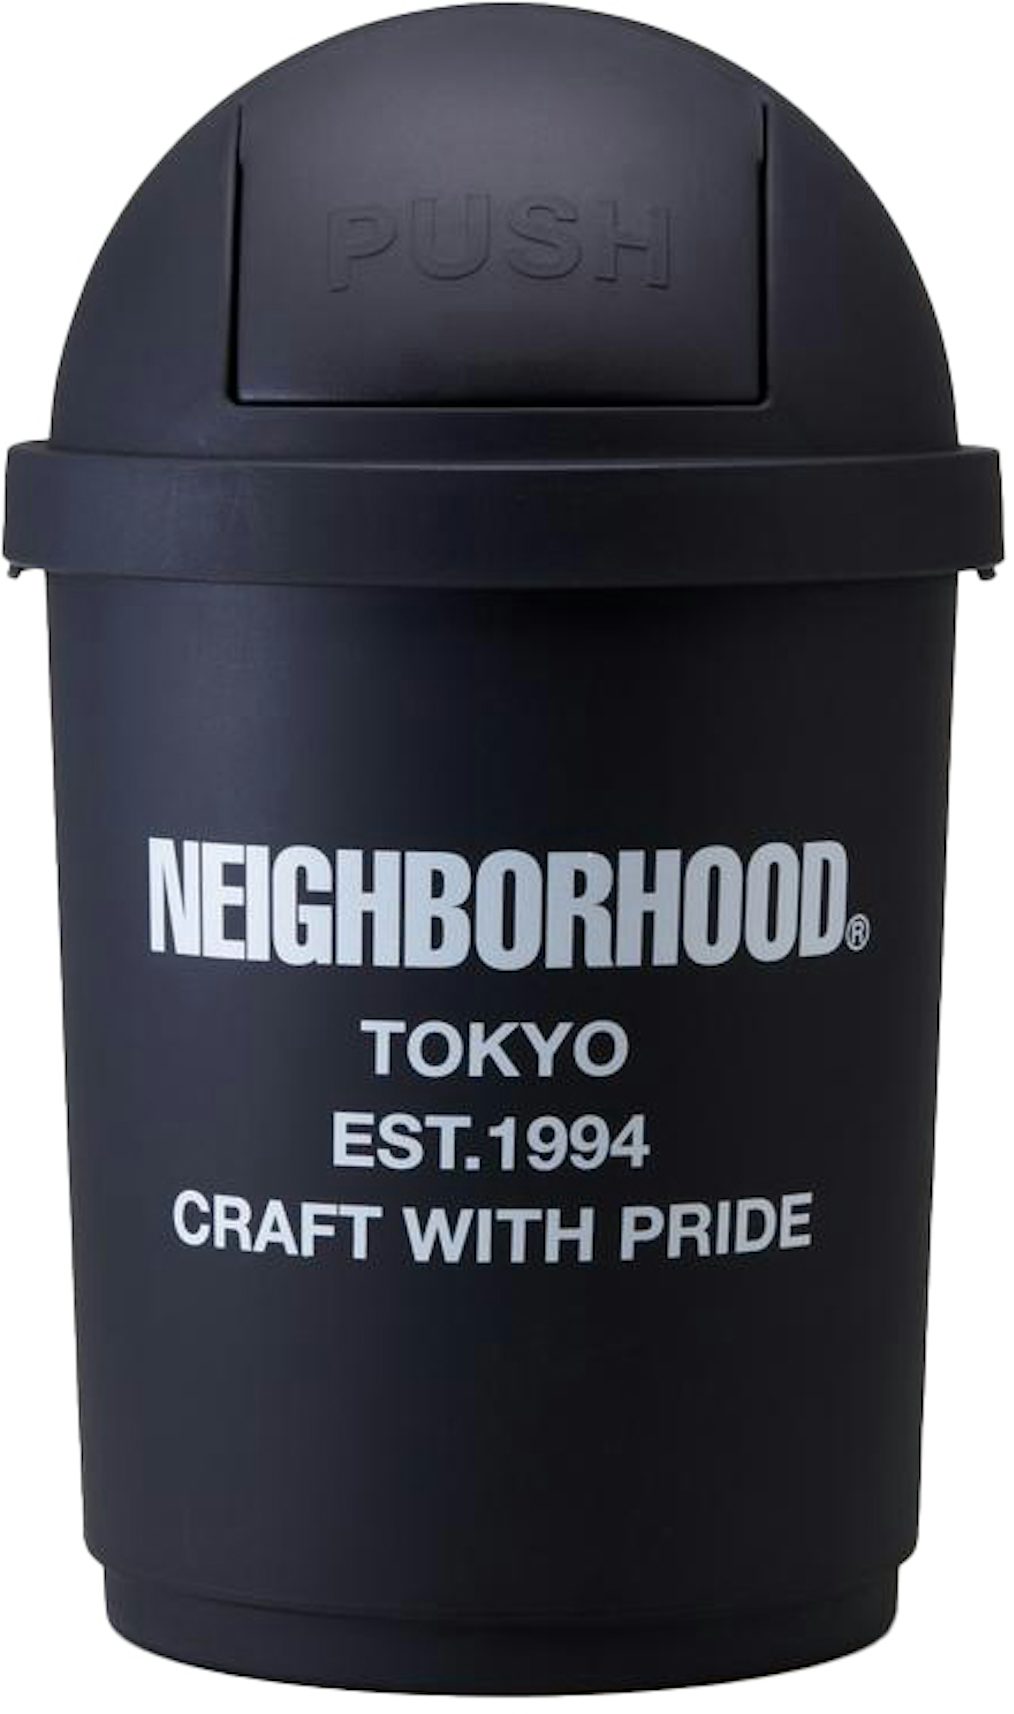 Neighborhood CI/P Trash Can Black - FW21 - US